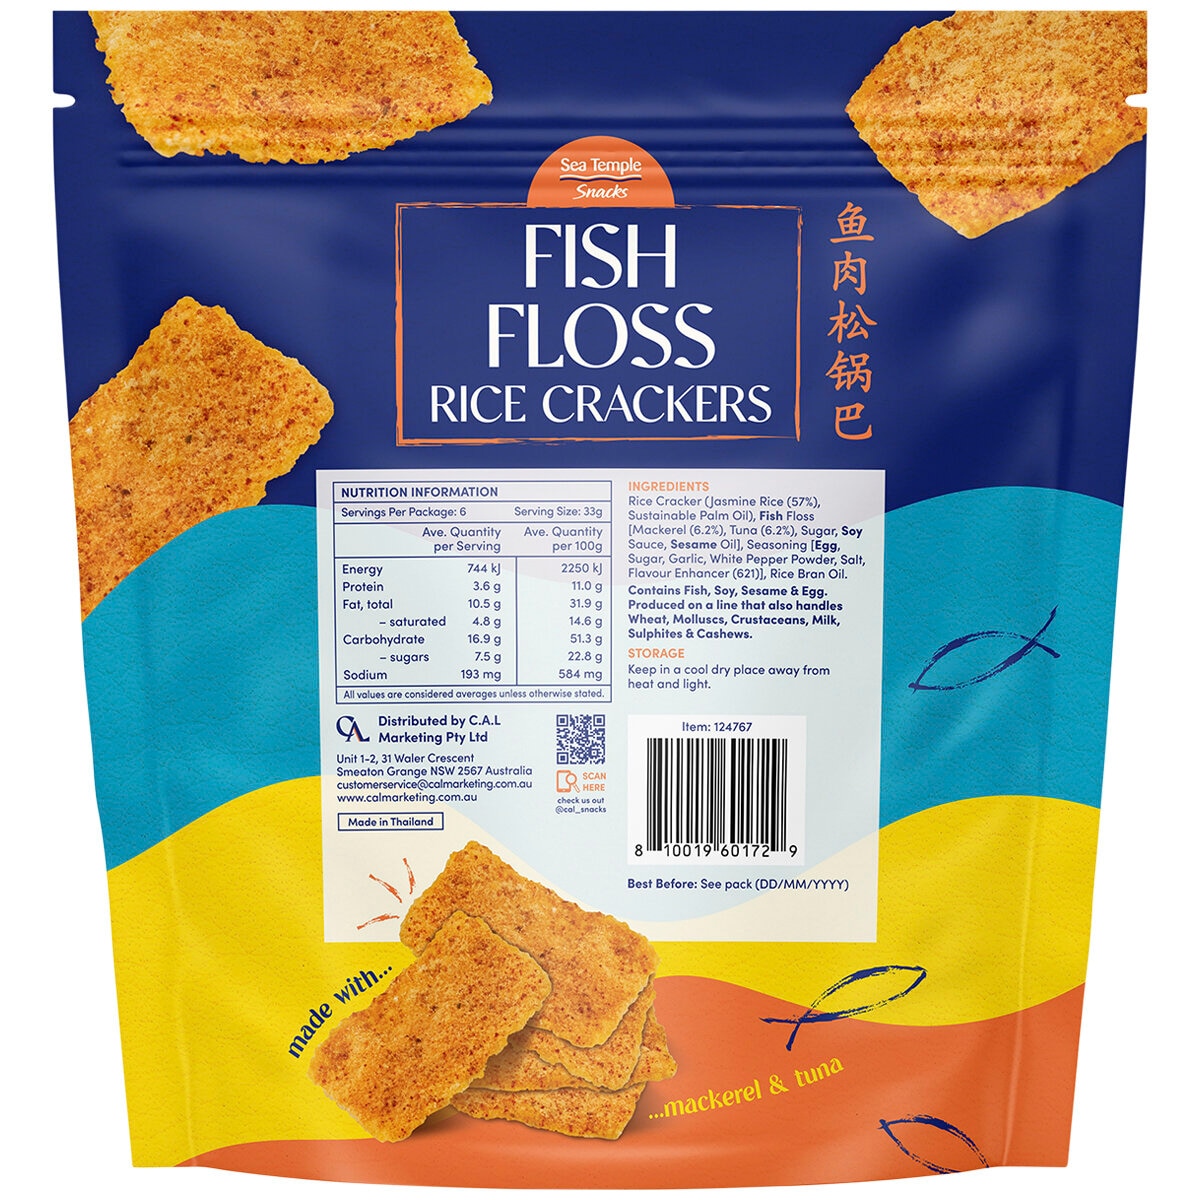 Jeg klager perle stum Sea Temple Fish Floss Rice Crackers 200g | Costco Australia